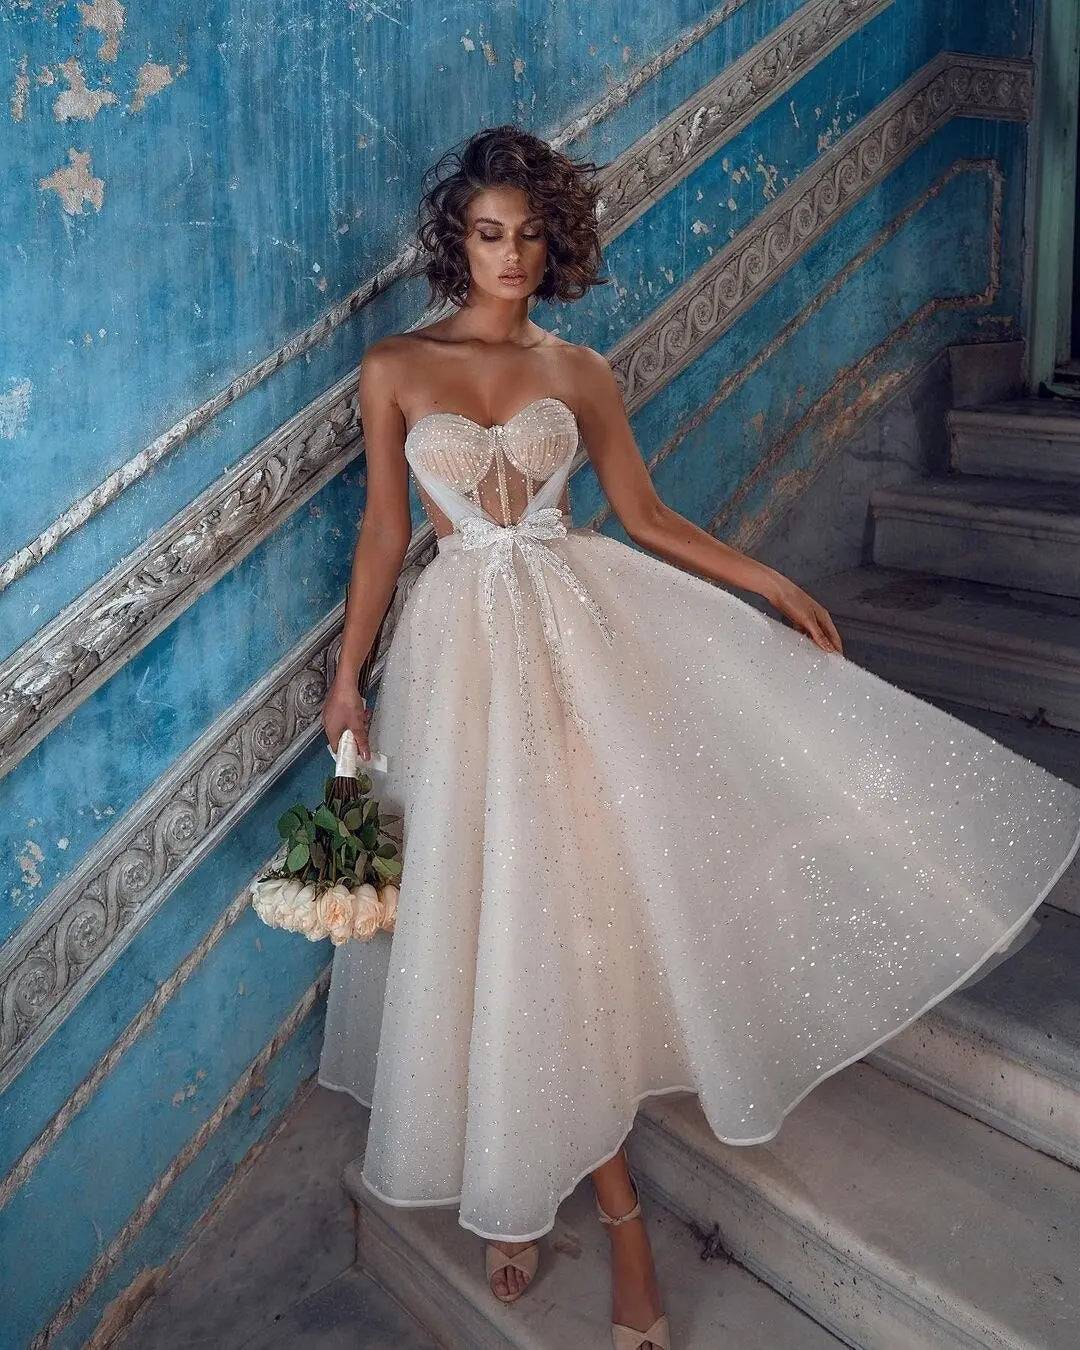 Unique  Wedding dress/ Prom Dress/ Bridesmaids dress/ Flower girls dress / Occasional dress/ photoshoot dress / Birthday dress / Prom Dress Lady Versus